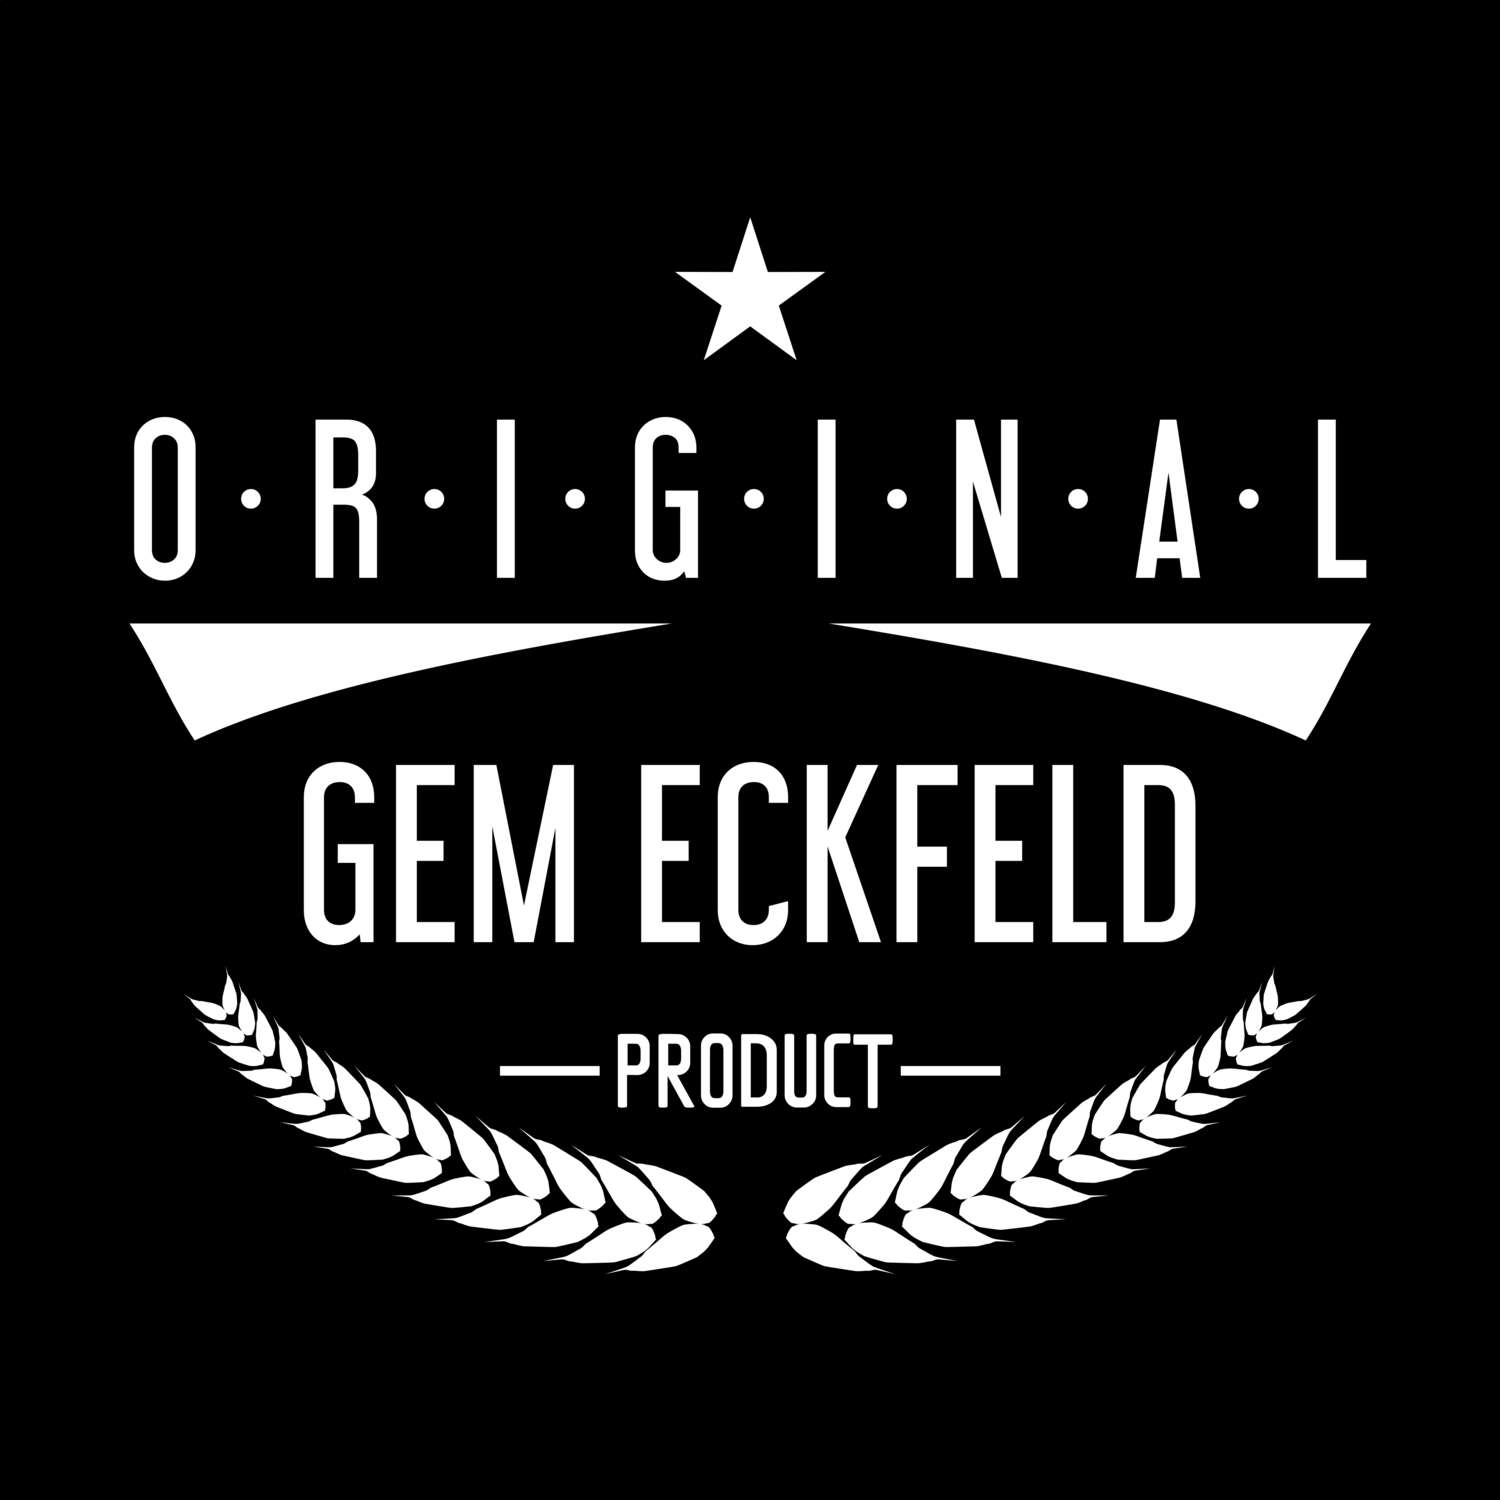 Gem Eckfeld T-Shirt »Original Product«